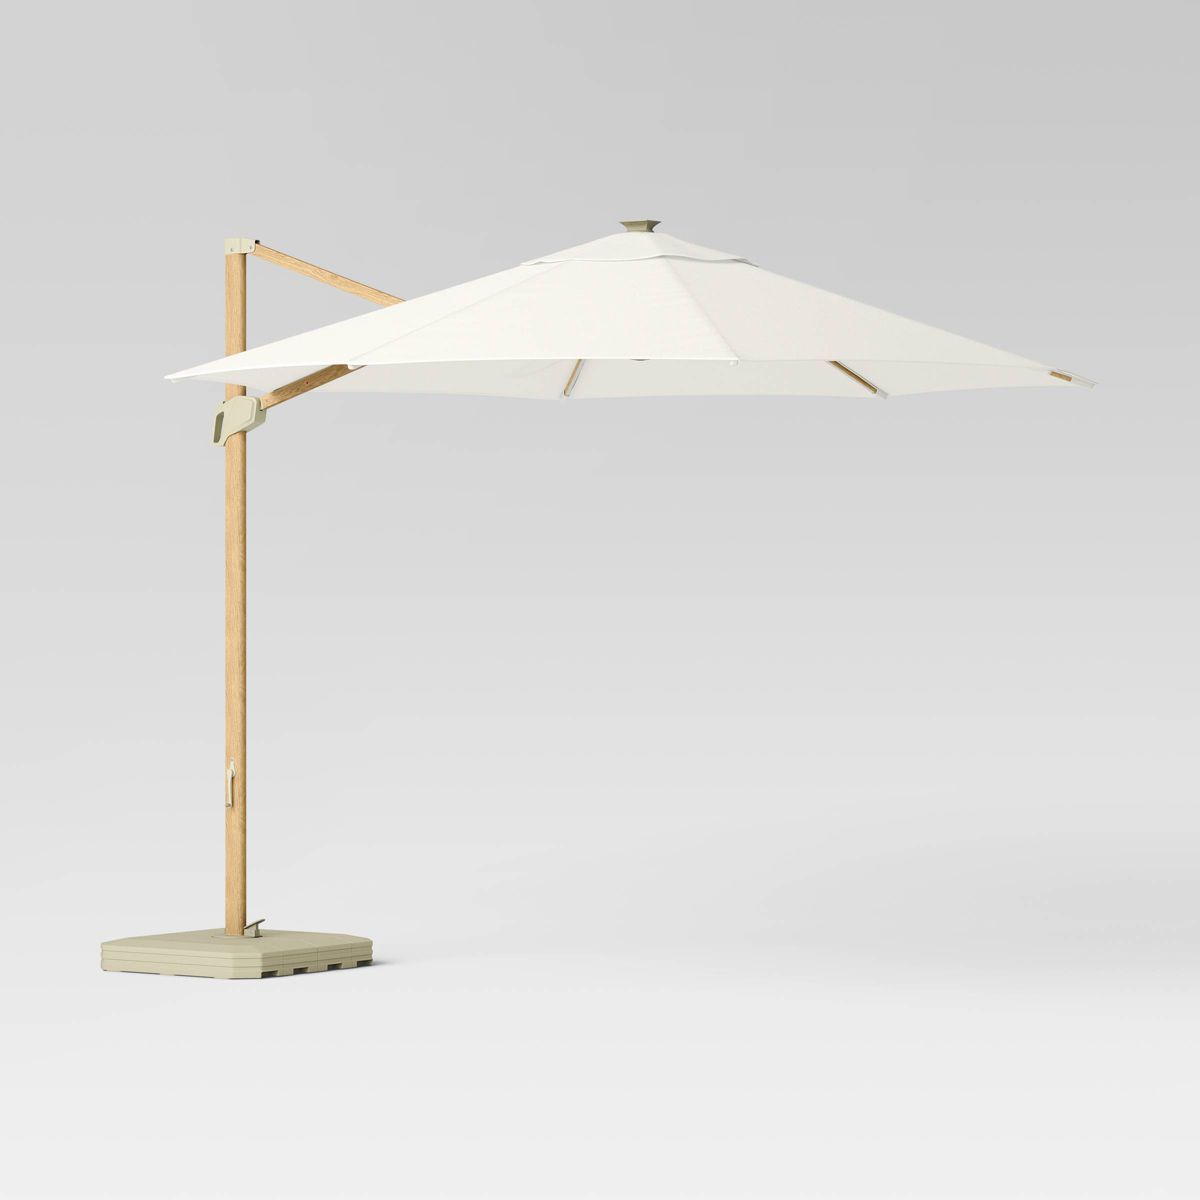 11' Round Offset Solar Outdoor Patio Market Umbrella Off-White with Light Wood Pole - Threshold... | Target